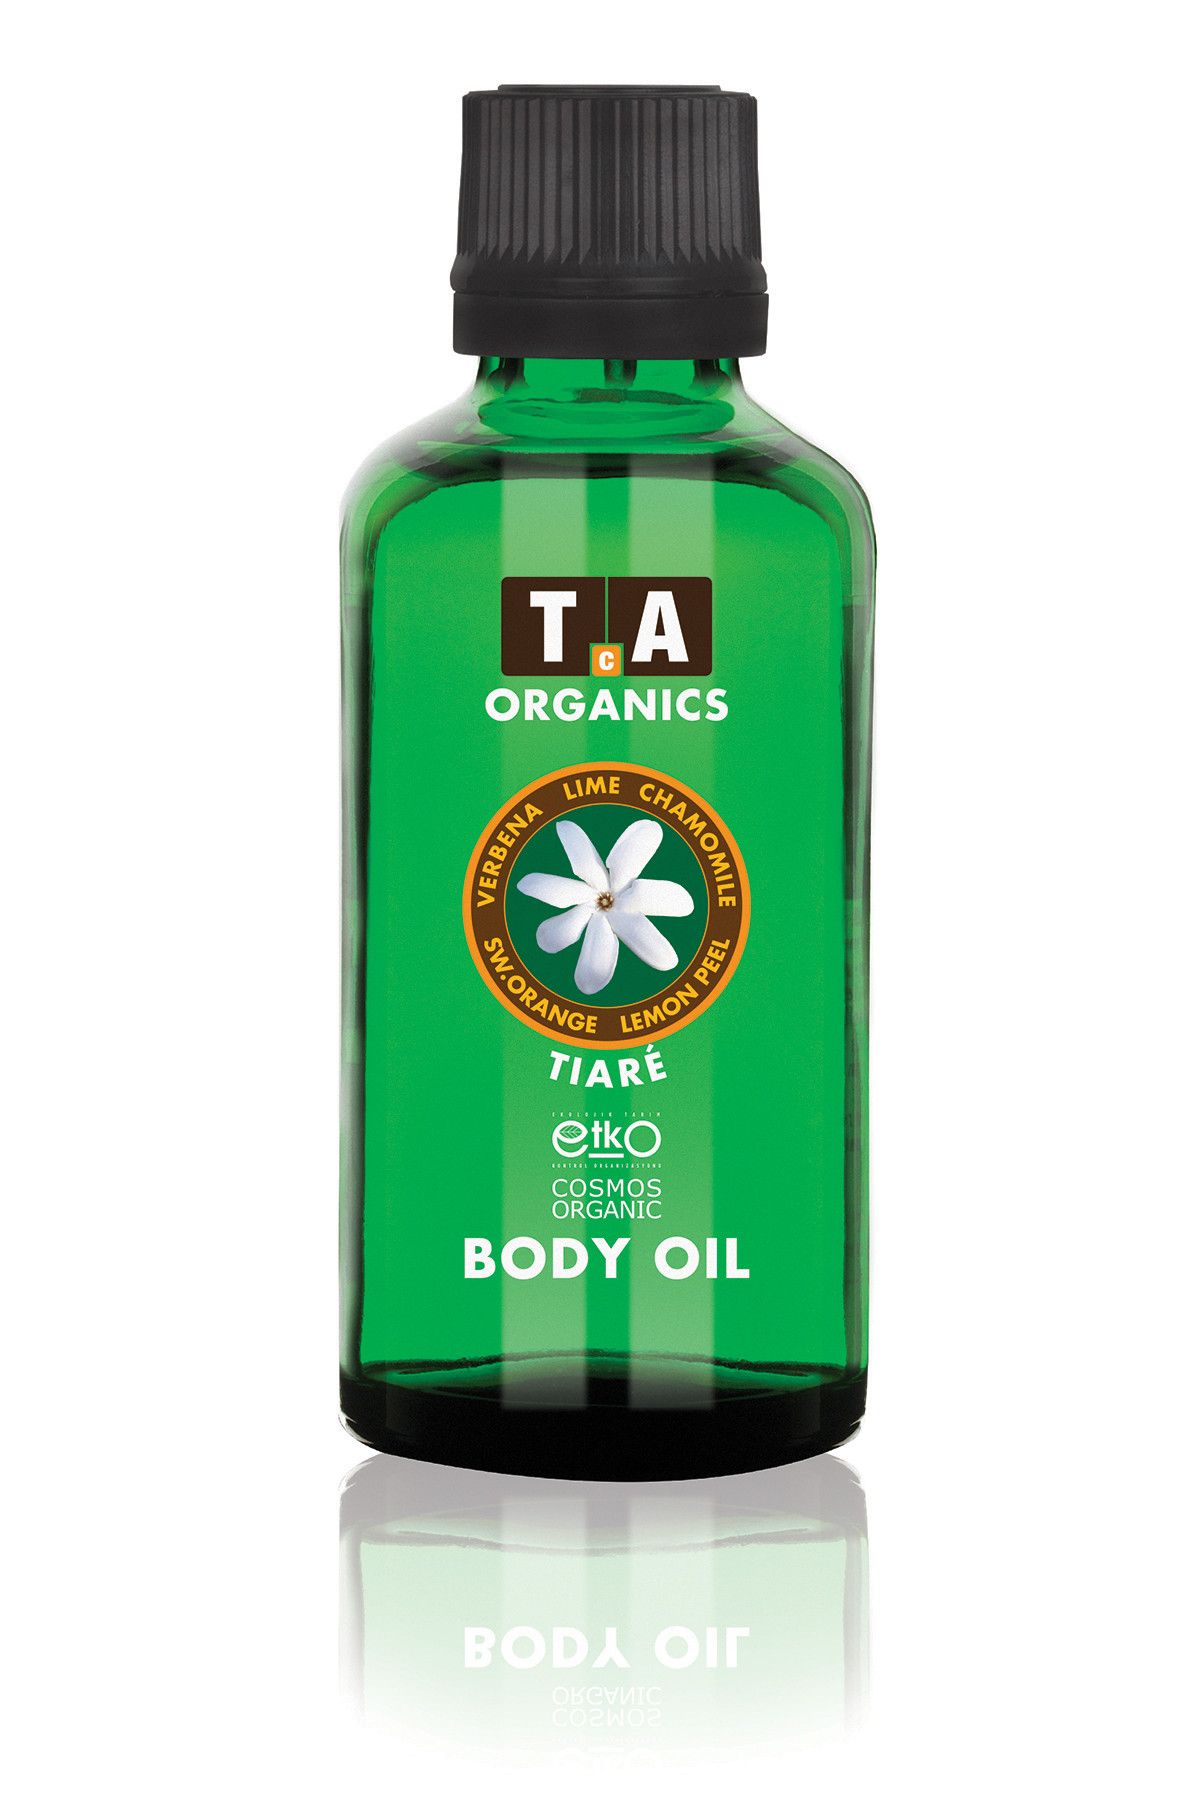 Tca Organics Vücut Yağı - Tiare Body Oil 50 ml 8680196184009